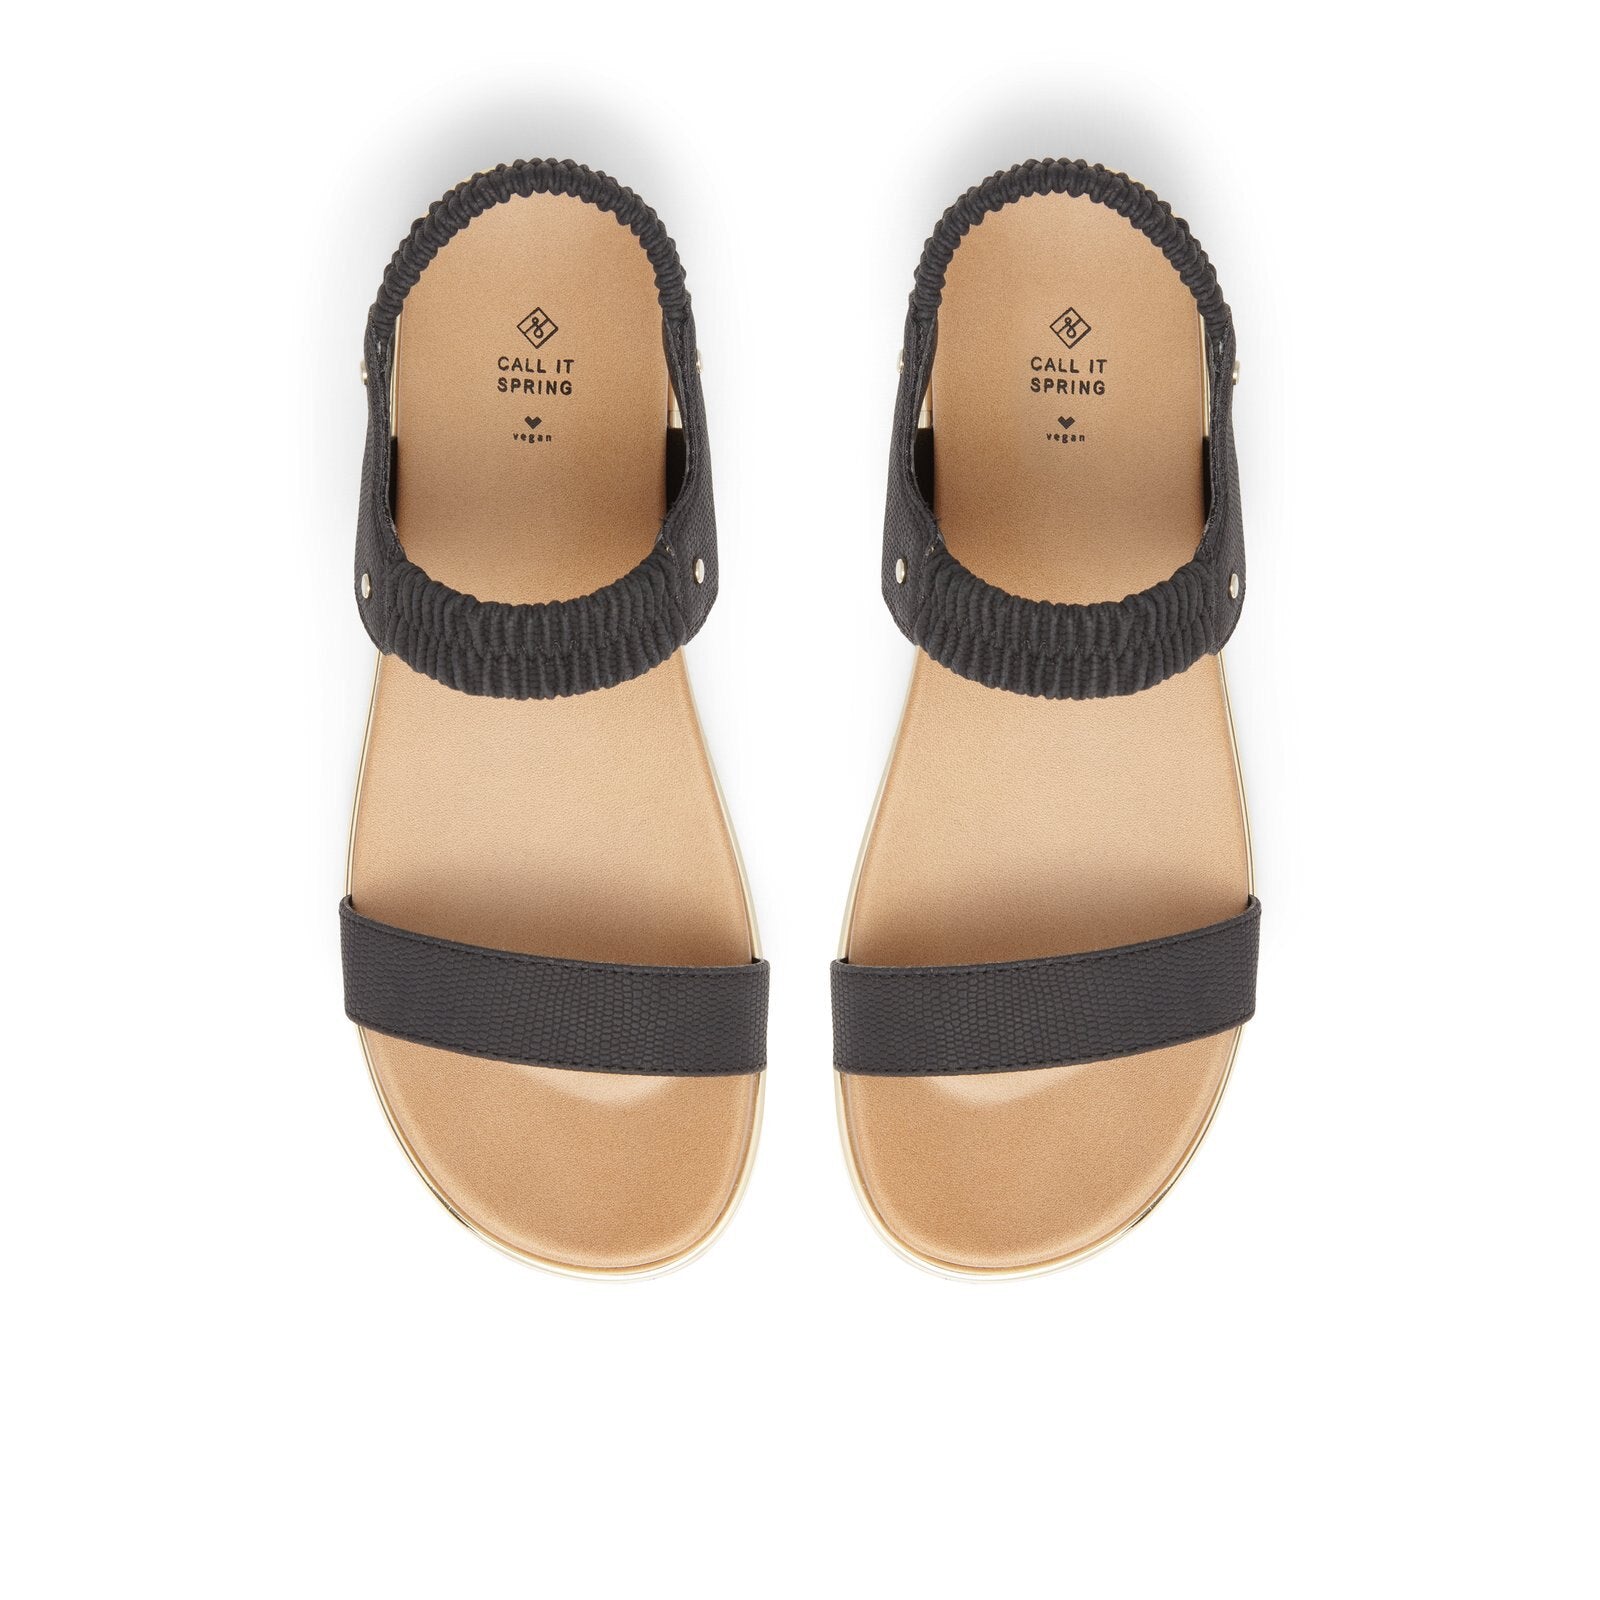 Rainia / Flat Sandals Women Shoes - Black - CALL IT SPRING KSA